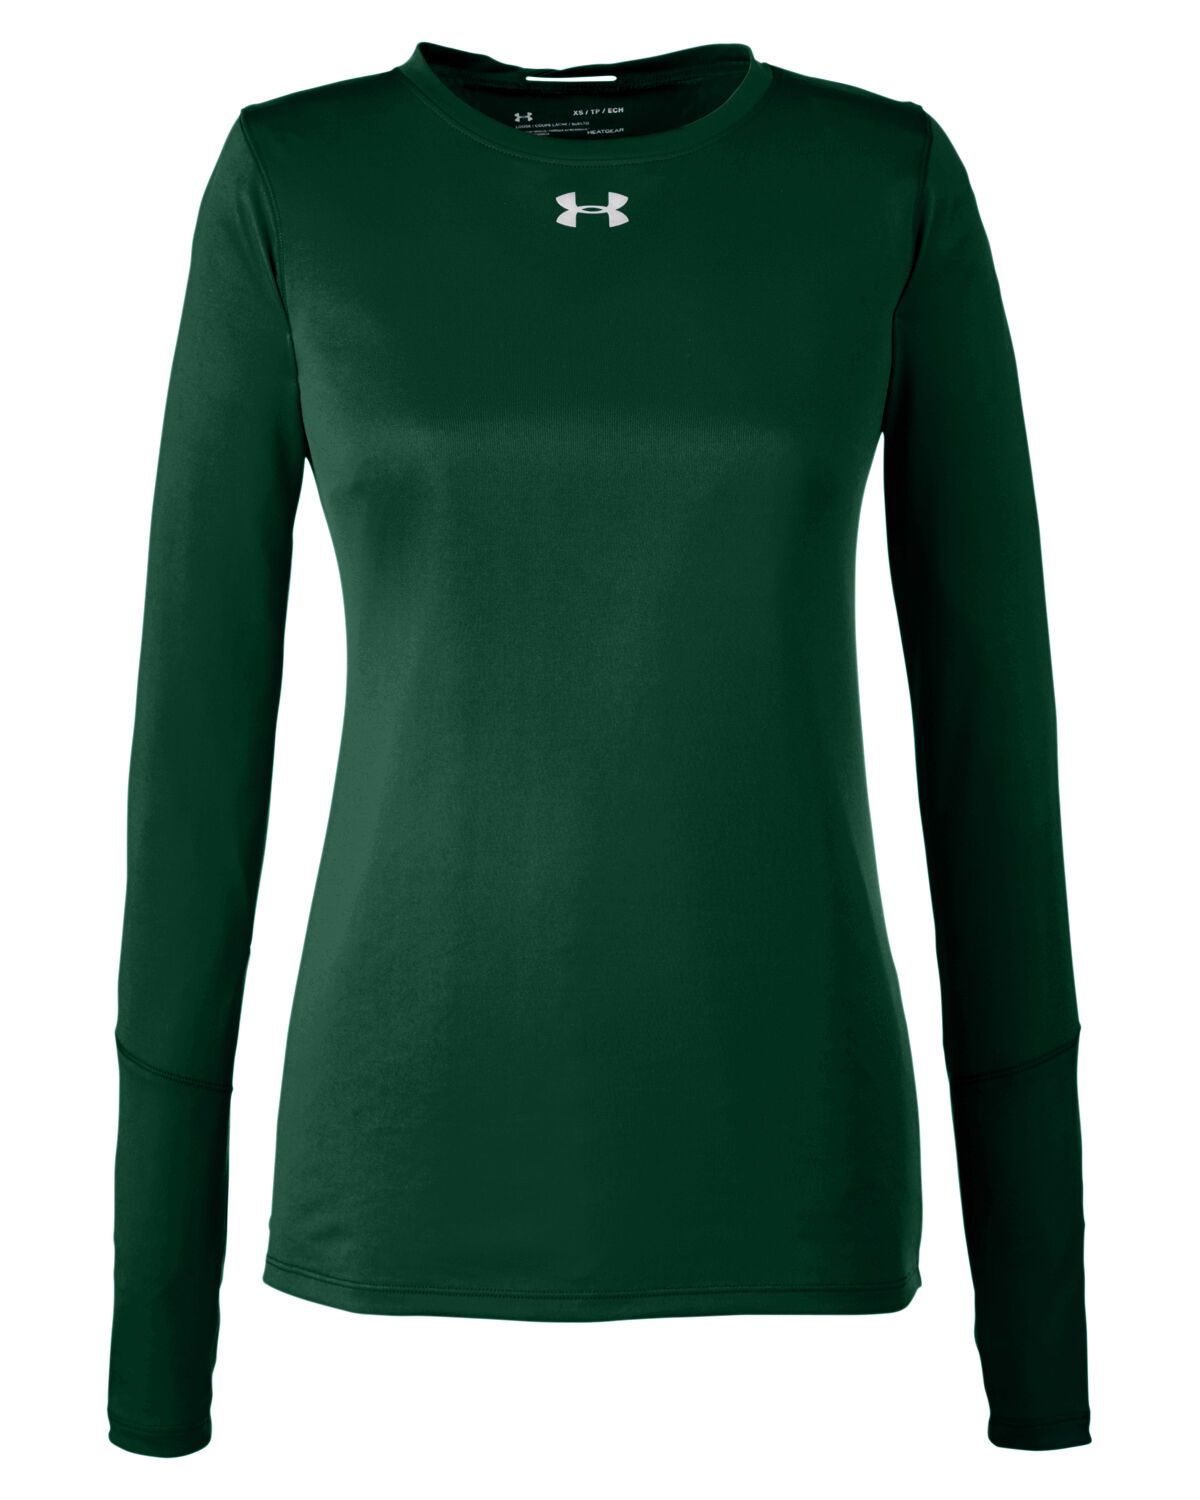 Branded Under Armour Ladies’ Long-Sleeve Locker T-Shirt 2.0 Forest Green/Metallic Silver